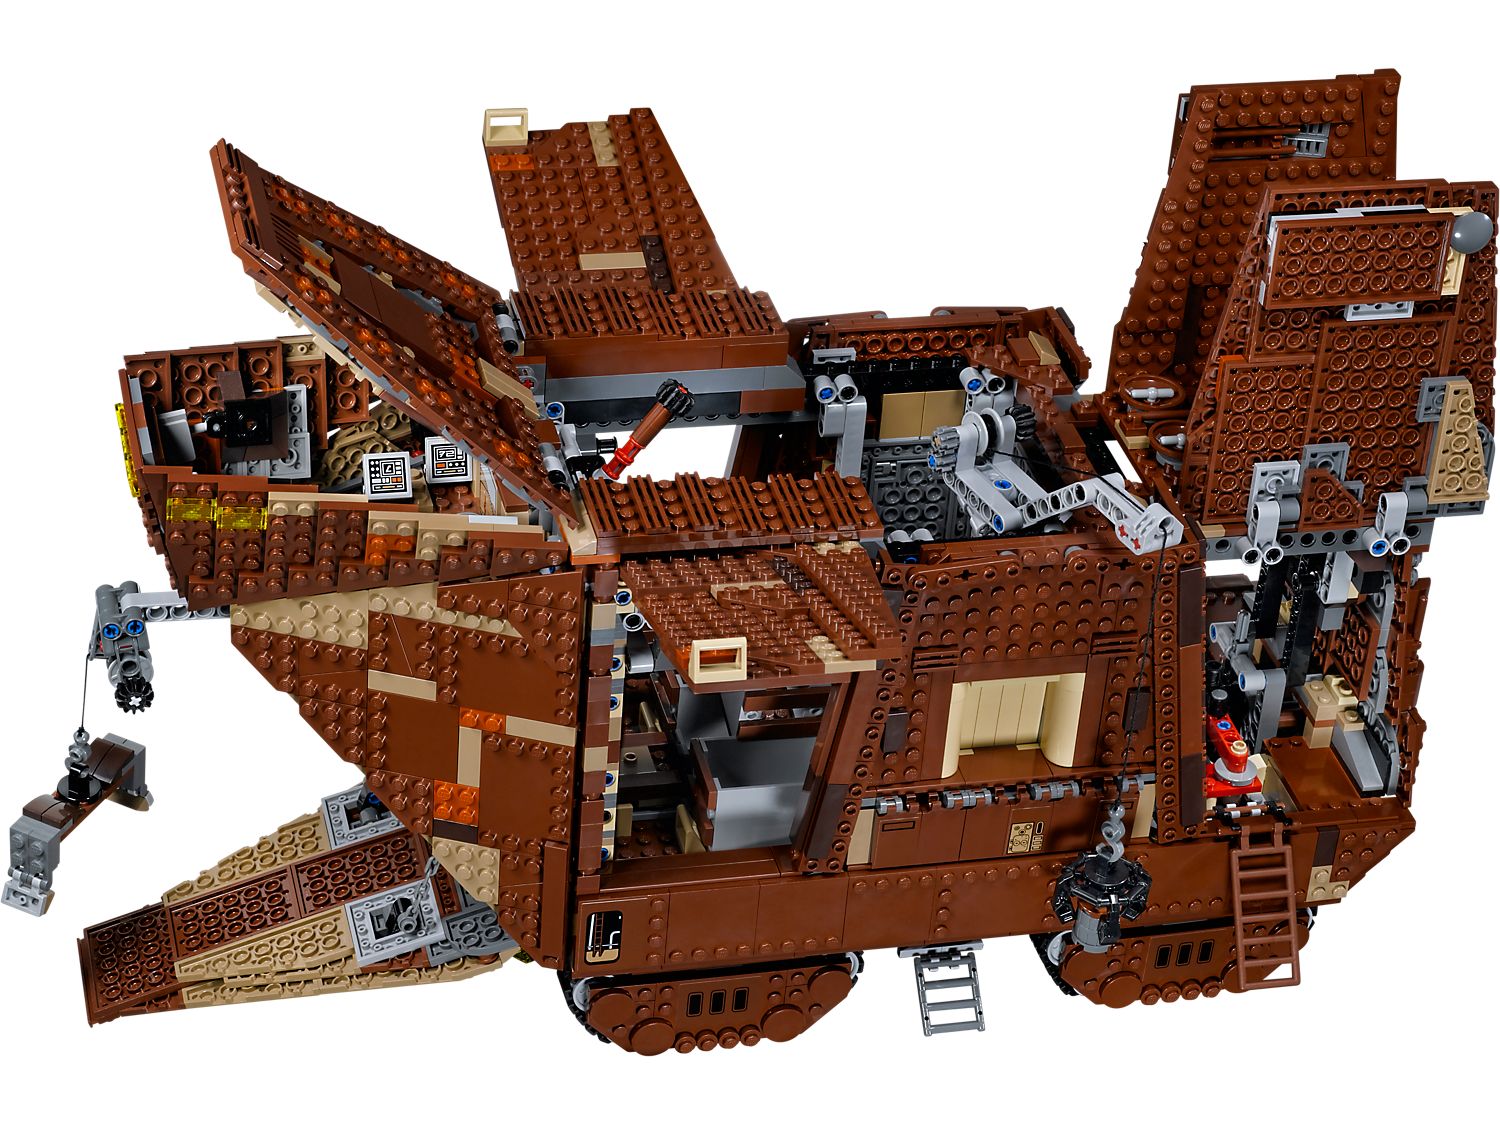 LEGO Star Wars: Sandcrawler - 75059